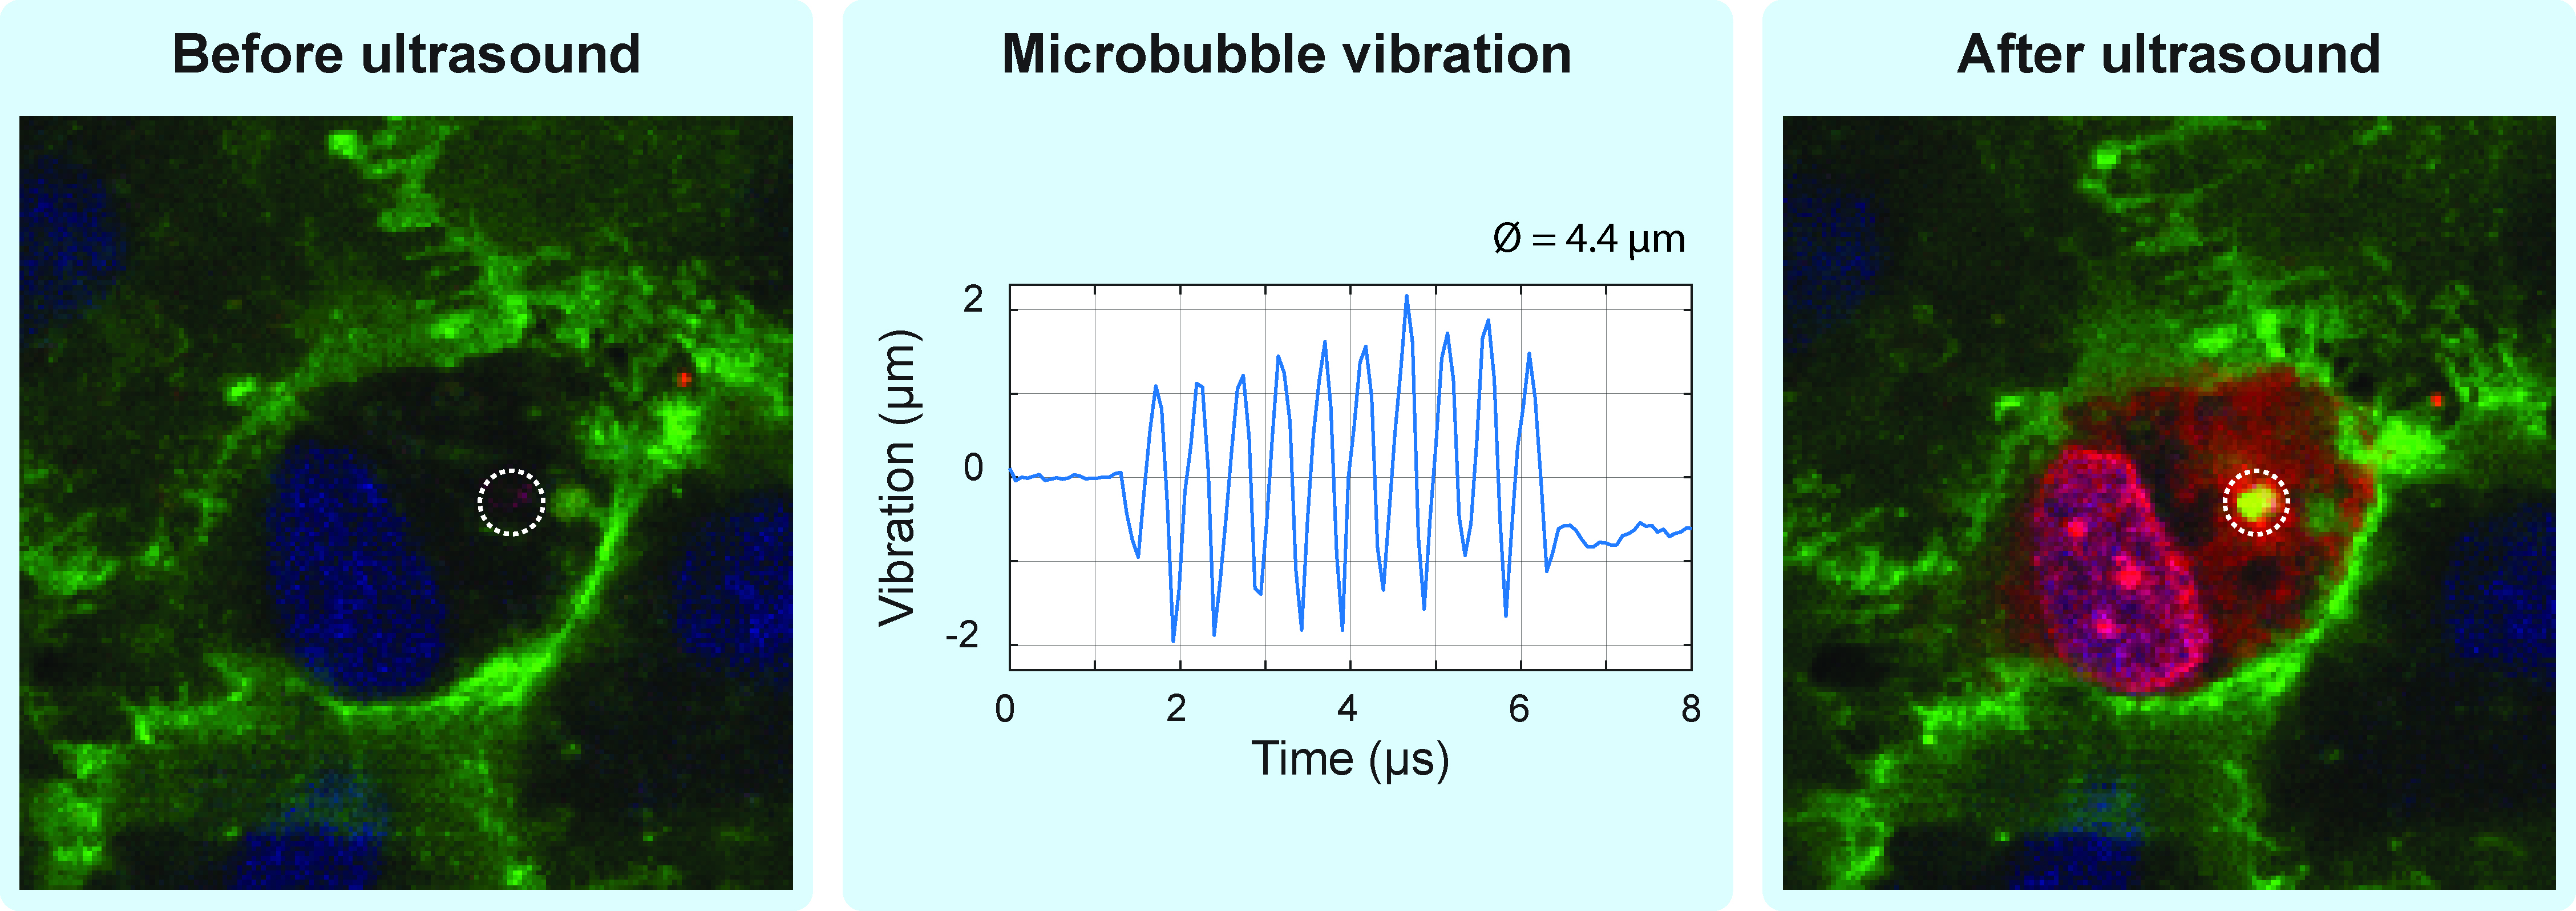 Microbubbles vibration